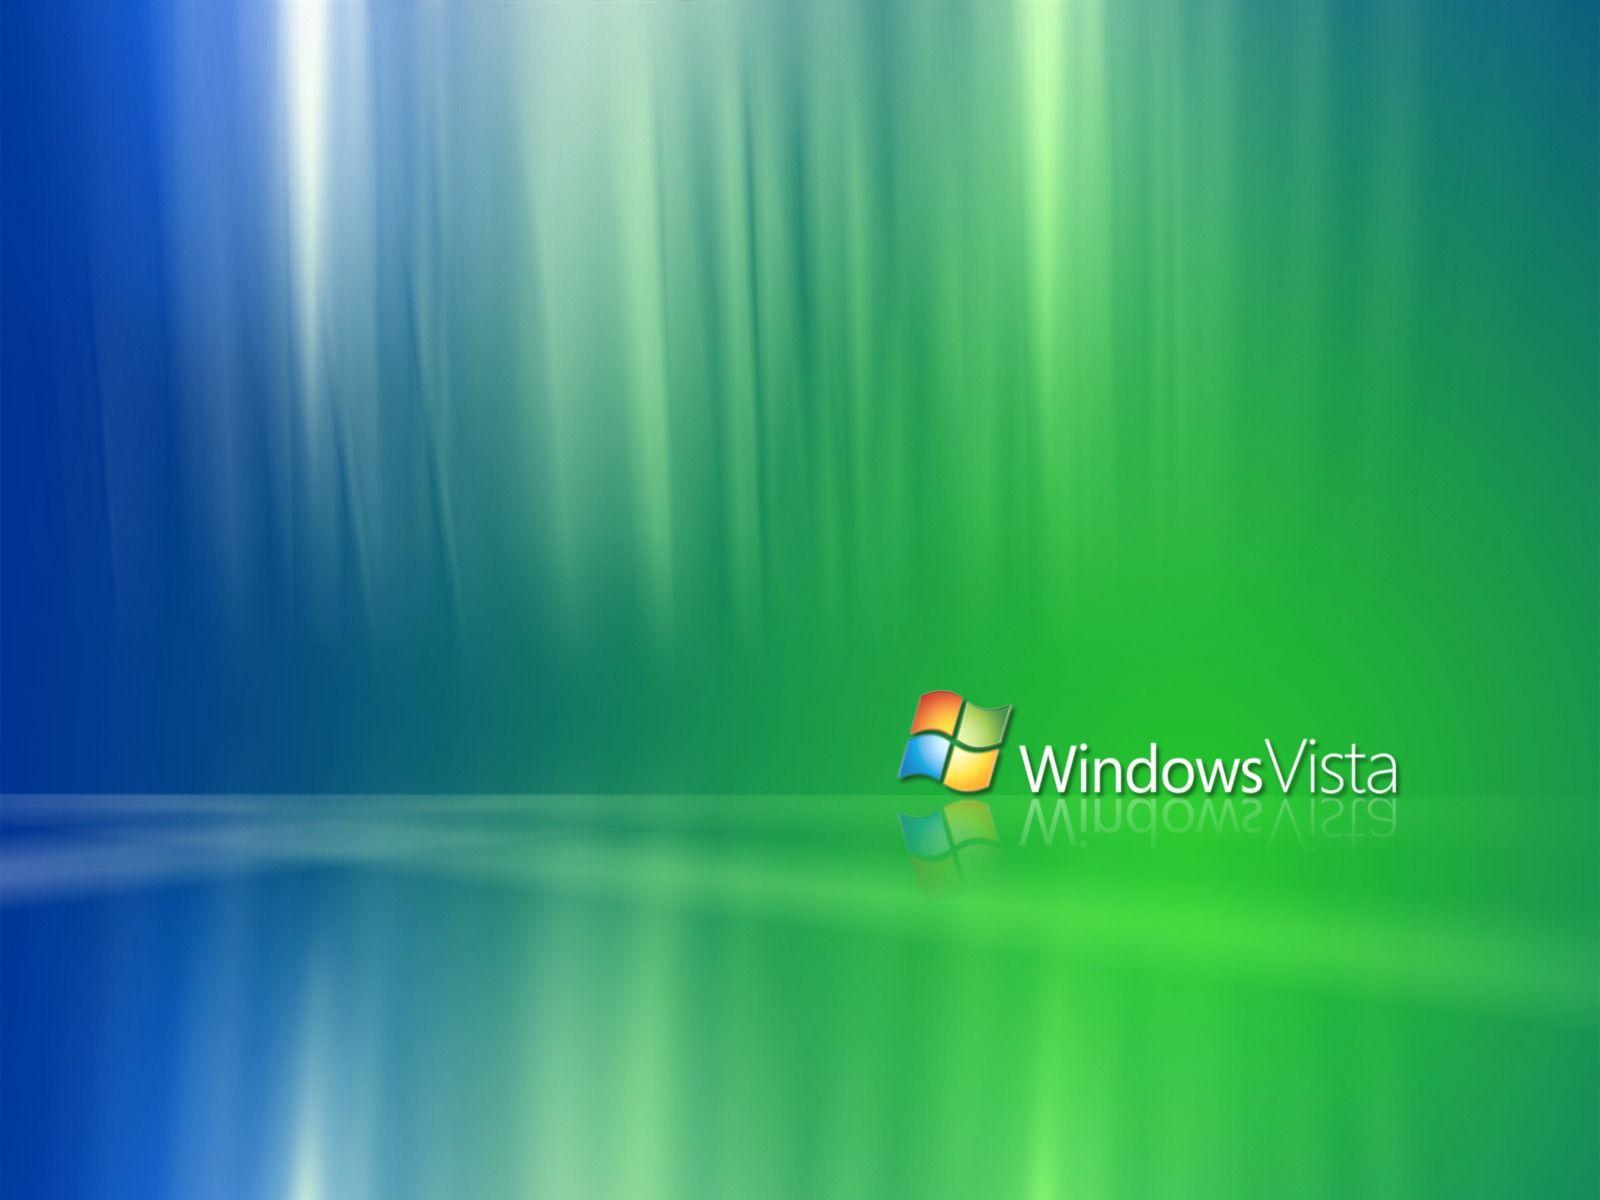 Windows Vista 壁紙 Windows Vista Ultimate 壁紙 Jokiotelublogimg